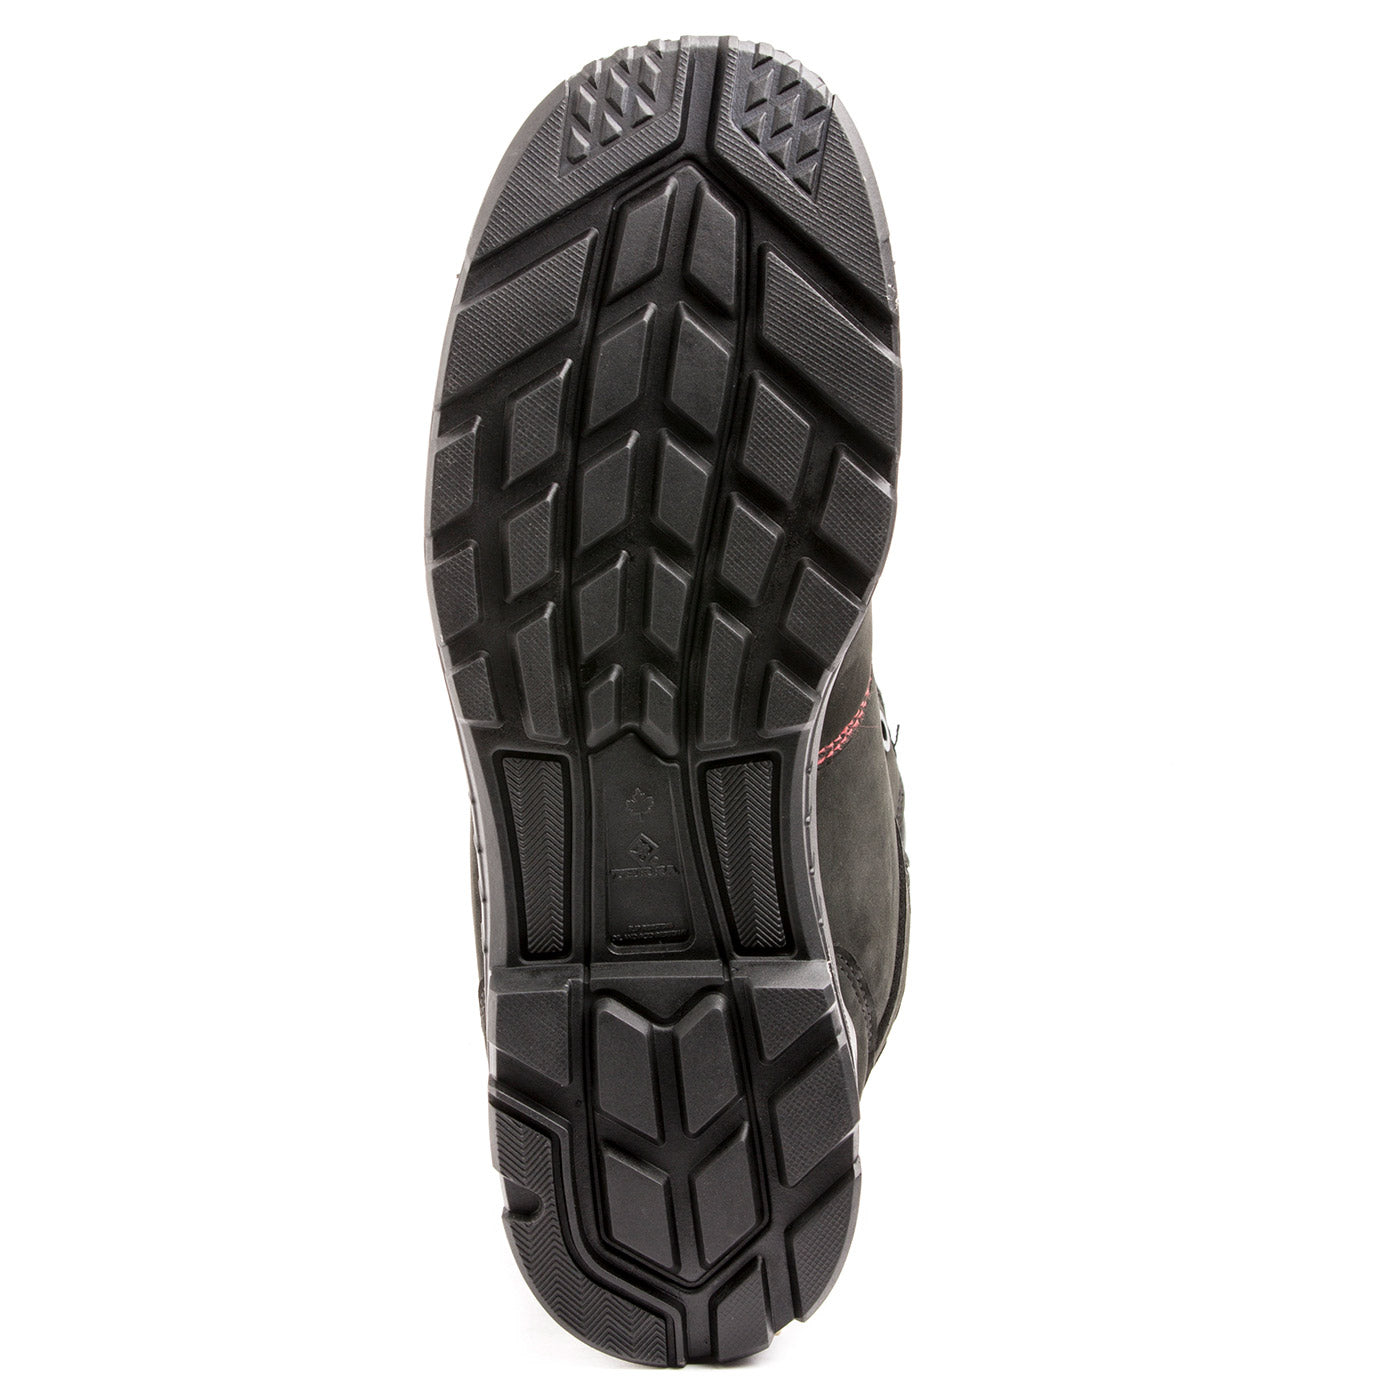 Terra Barricade Composite Toe 6" External Metguard Men's Safety Work Boots | Brown | Sizes 7 - 14 Work Boots - Cleanflow